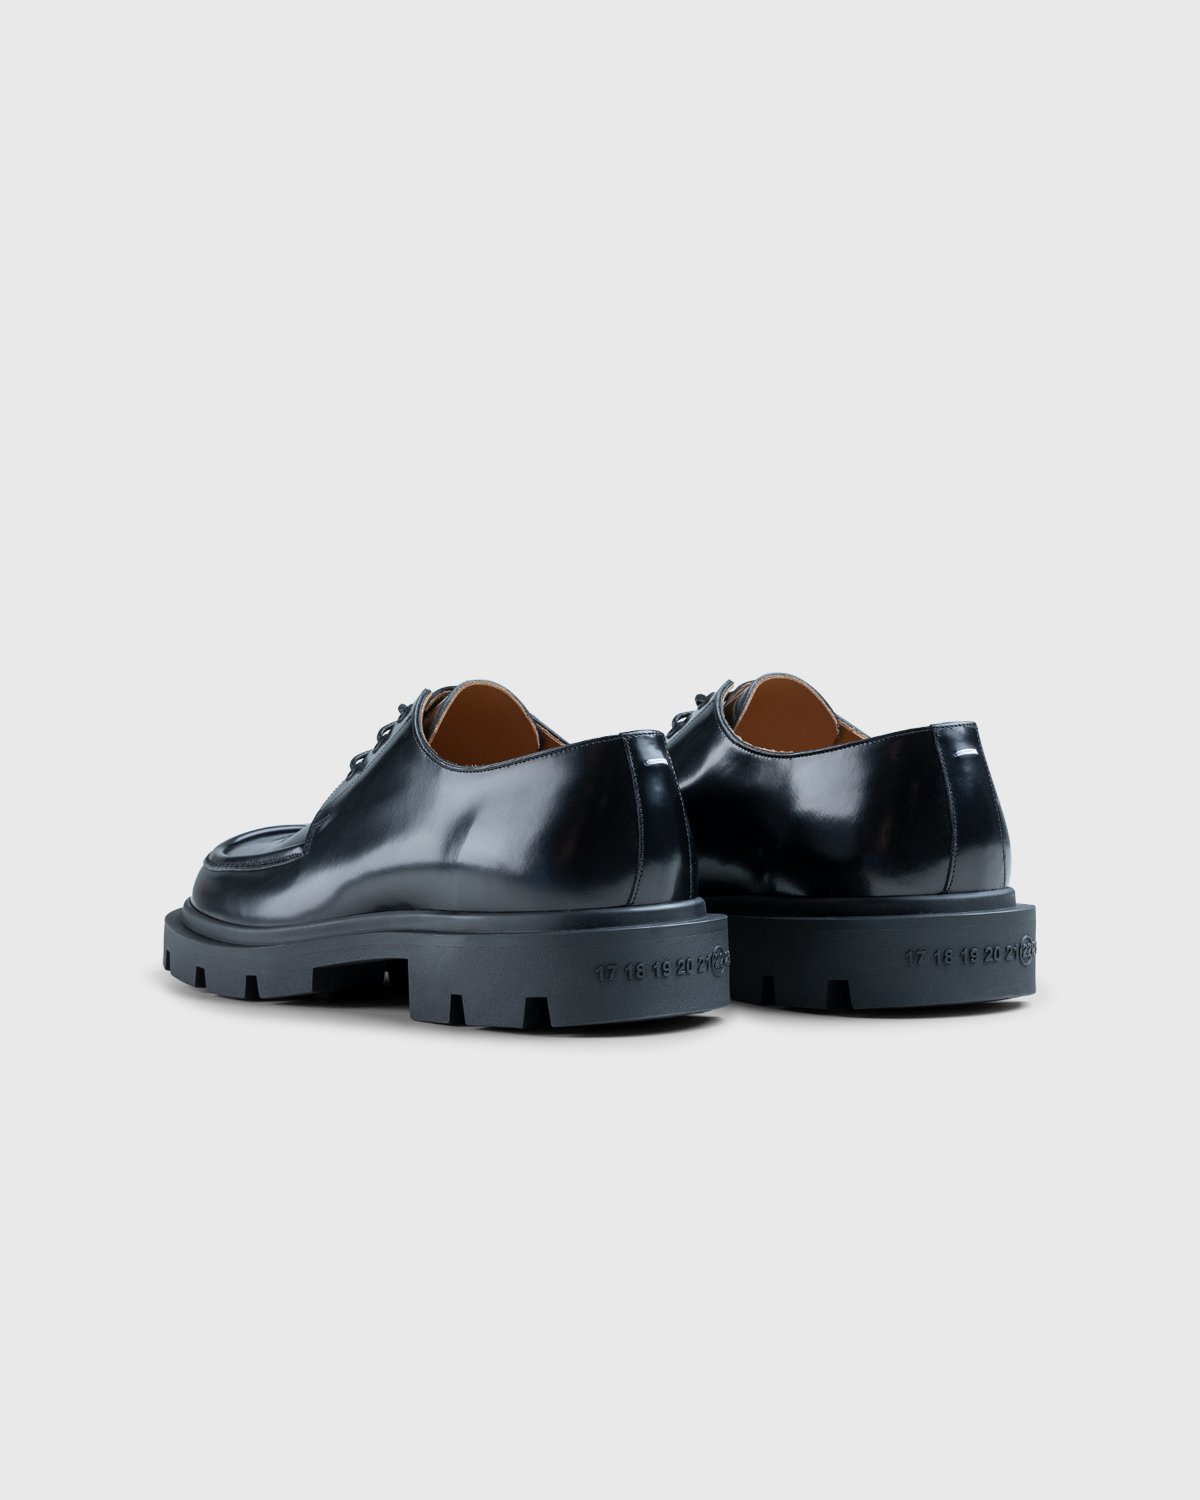 Maison Margiela - Cleated Sole Shoes Black - Footwear - Black - Image 3